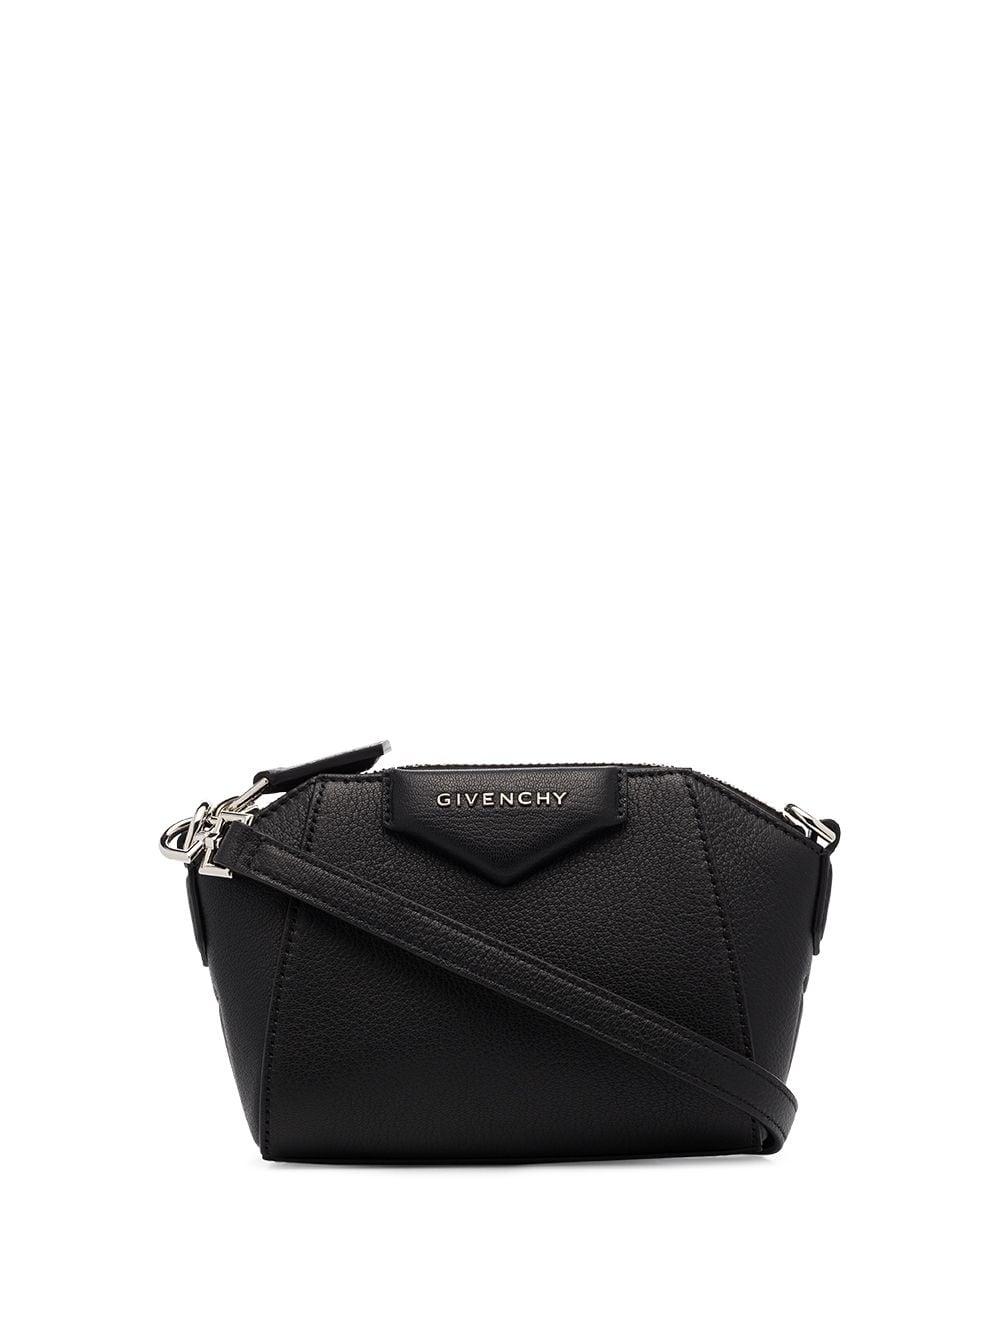 Givenchy Nano Antigona Mini Crossbody Leather Bag in Black | Lyst